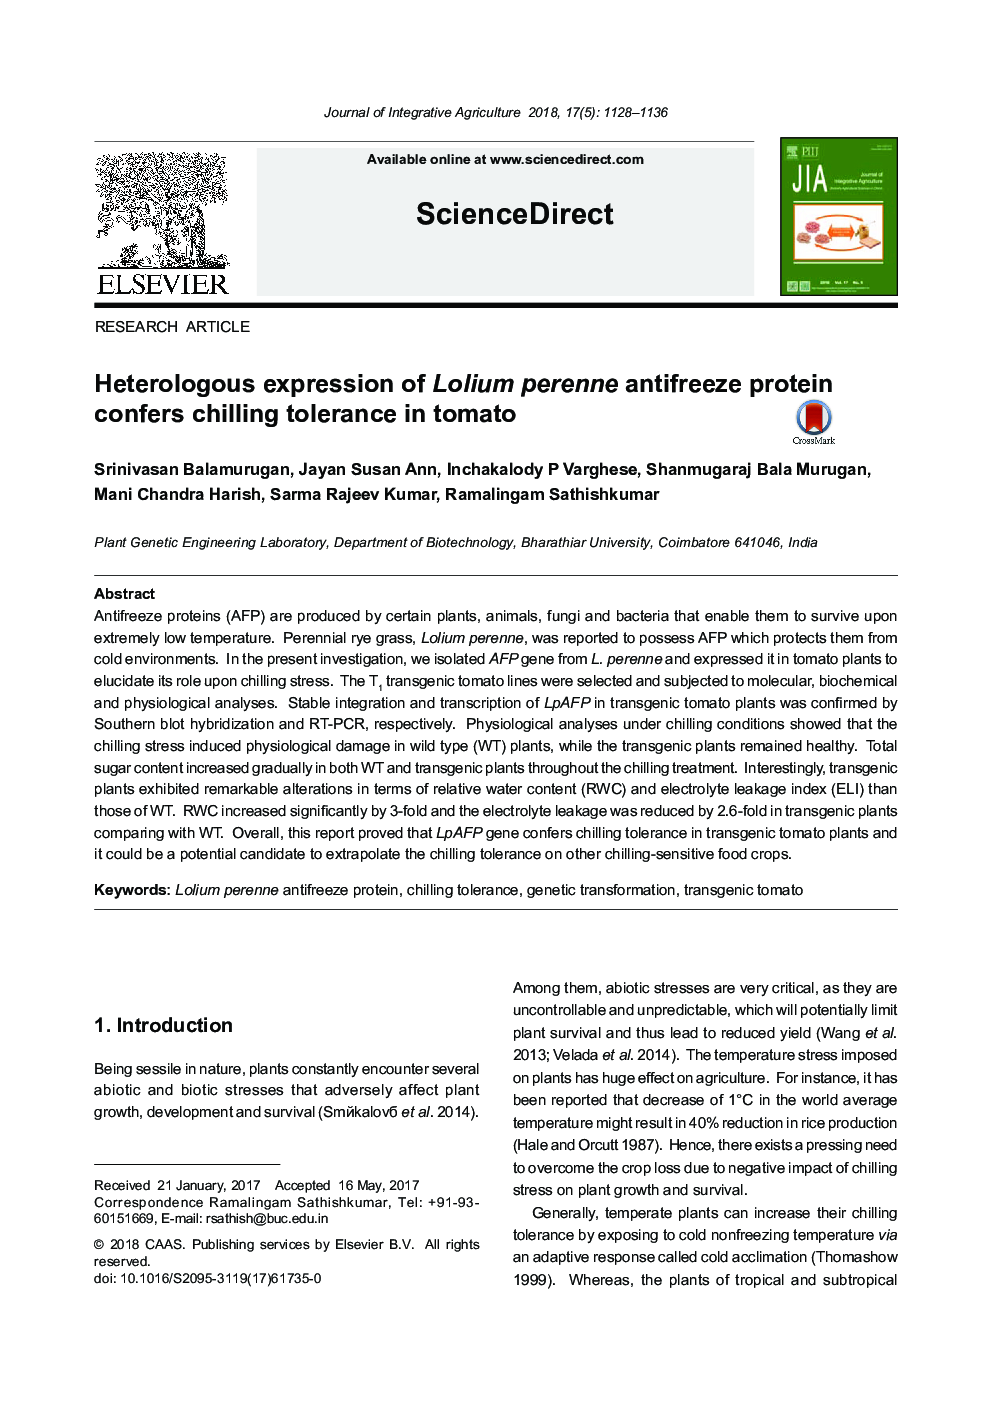 Heterologous expression of Lolium perenne antifreeze protein confers chilling tolerance in tomato